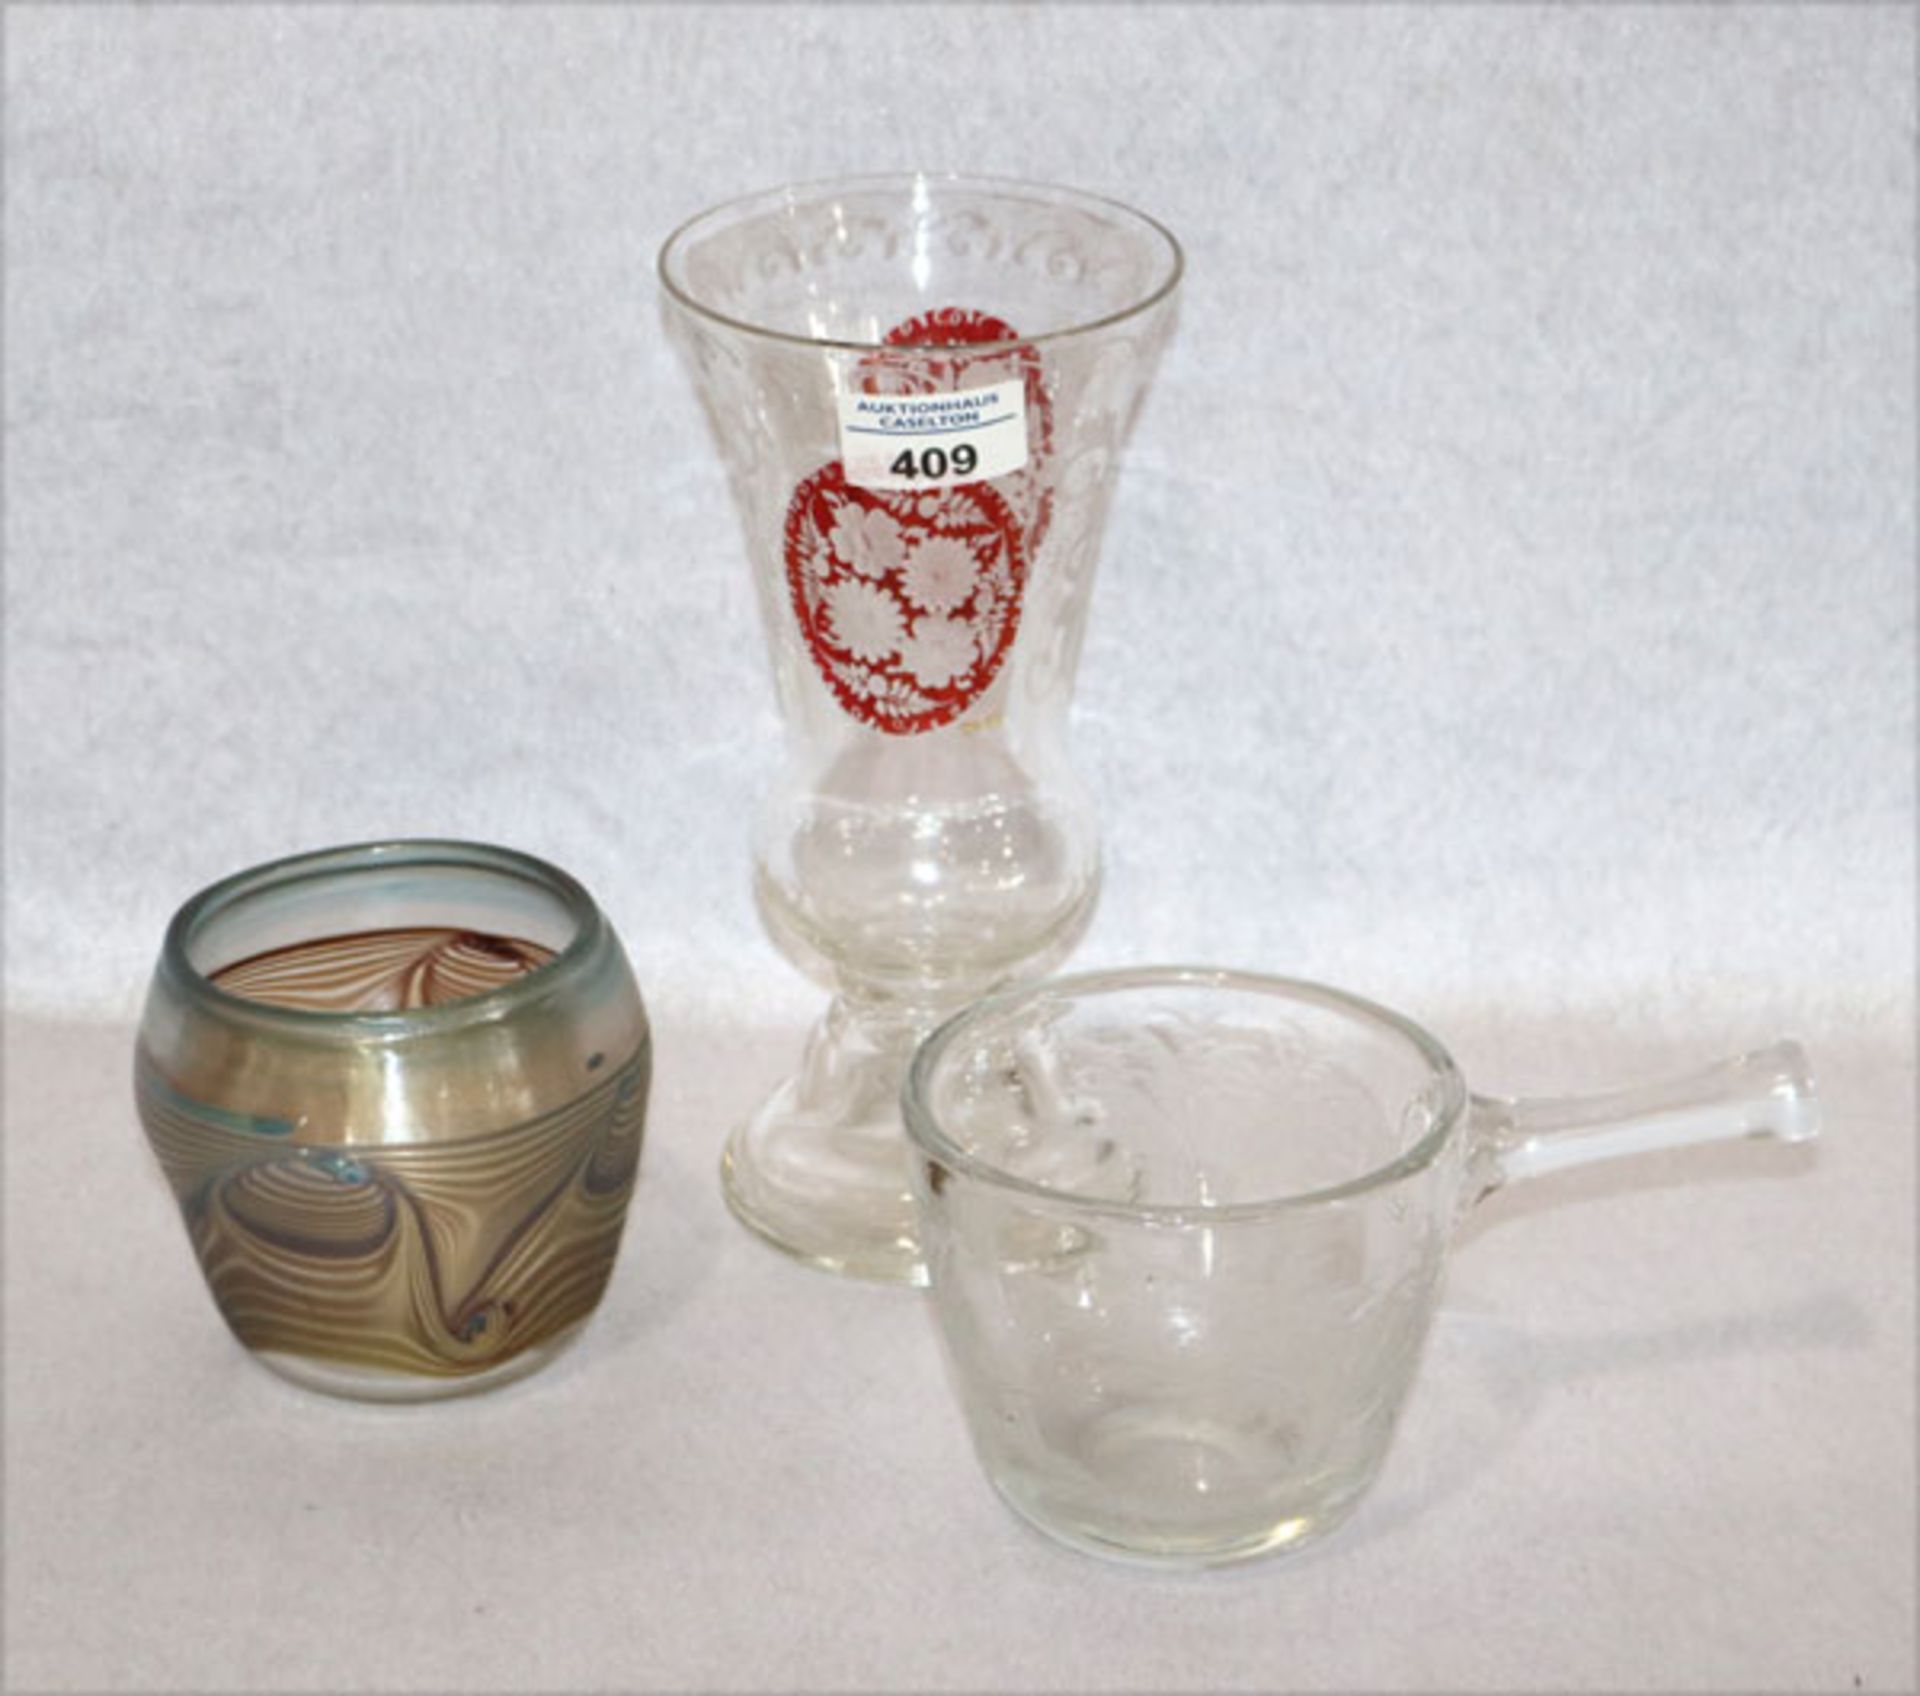 Glas-Konvolut: Pokalglas mit floraler Gravur, H 22 cm, D 10,5 cm, Stielgefäß mit Jagdgravur, H 10